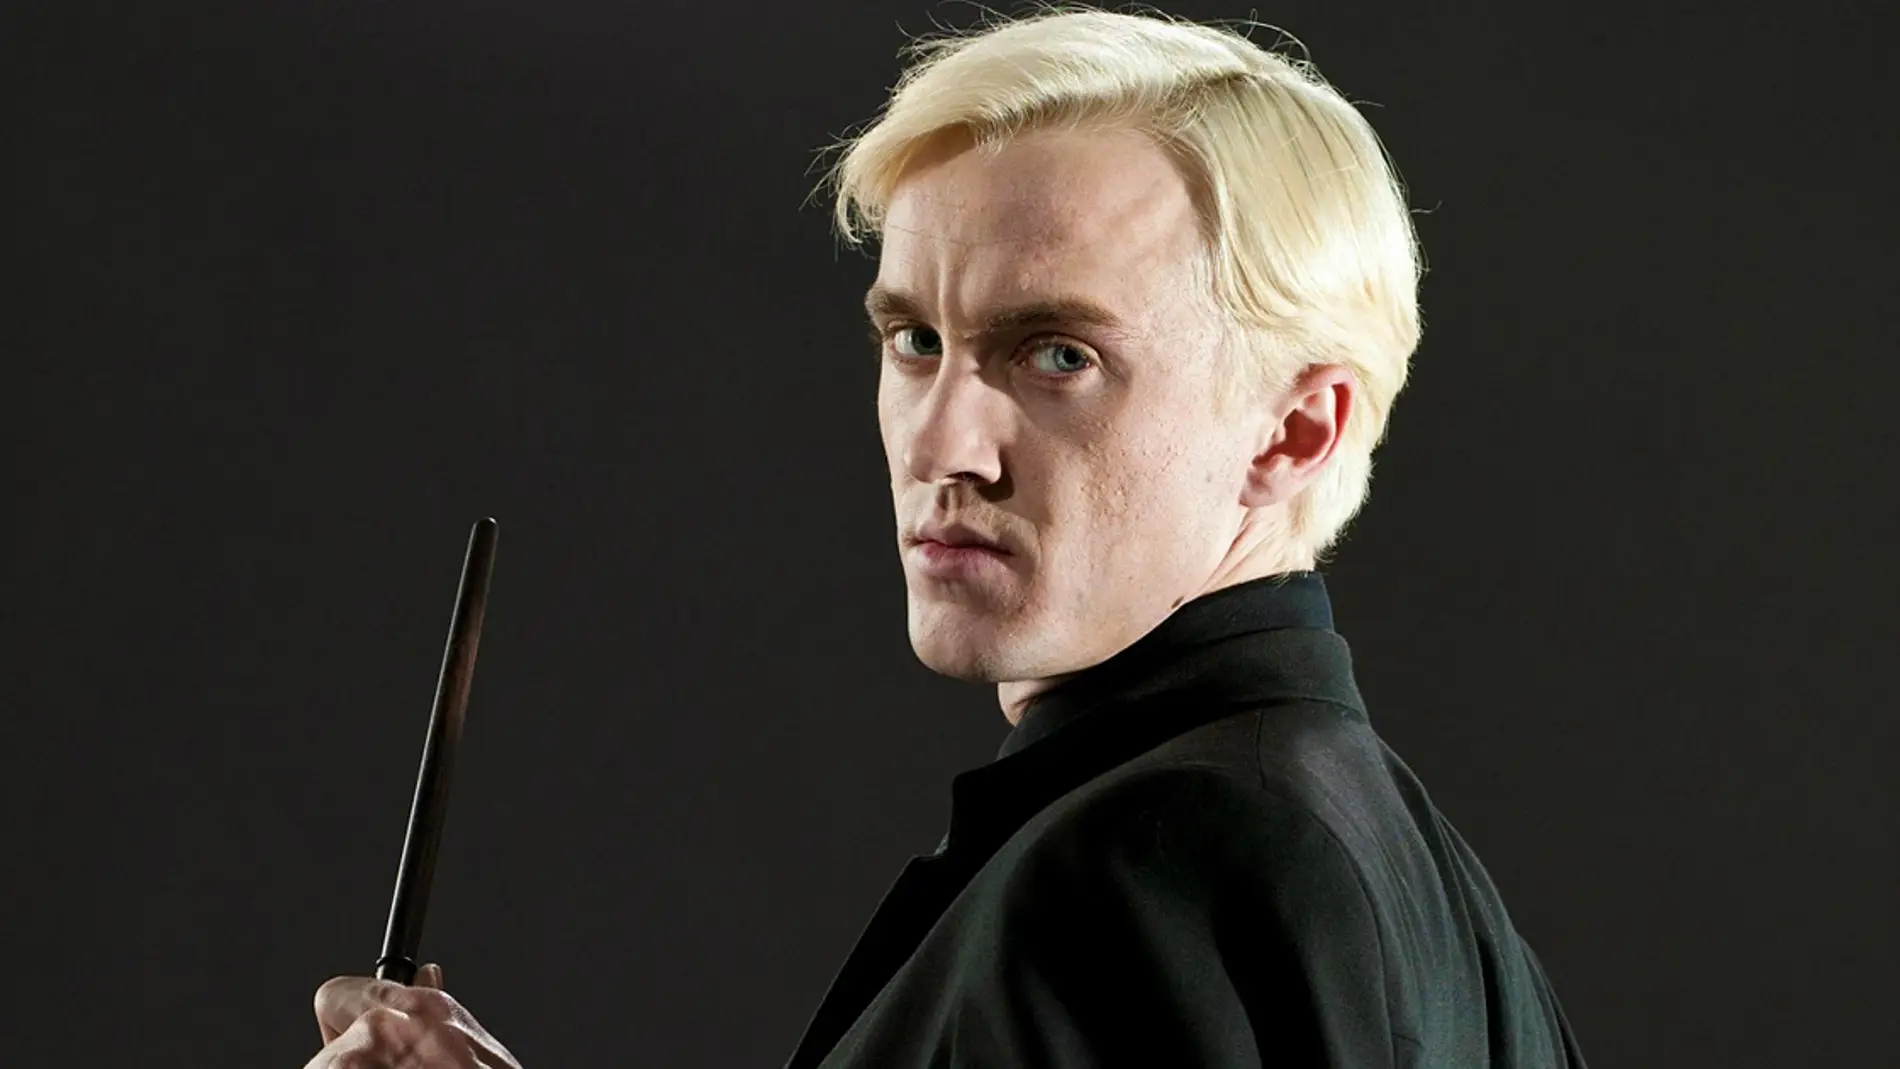 Tom Felton caracterizado como Draco Malfoy en 'Harry Potter'